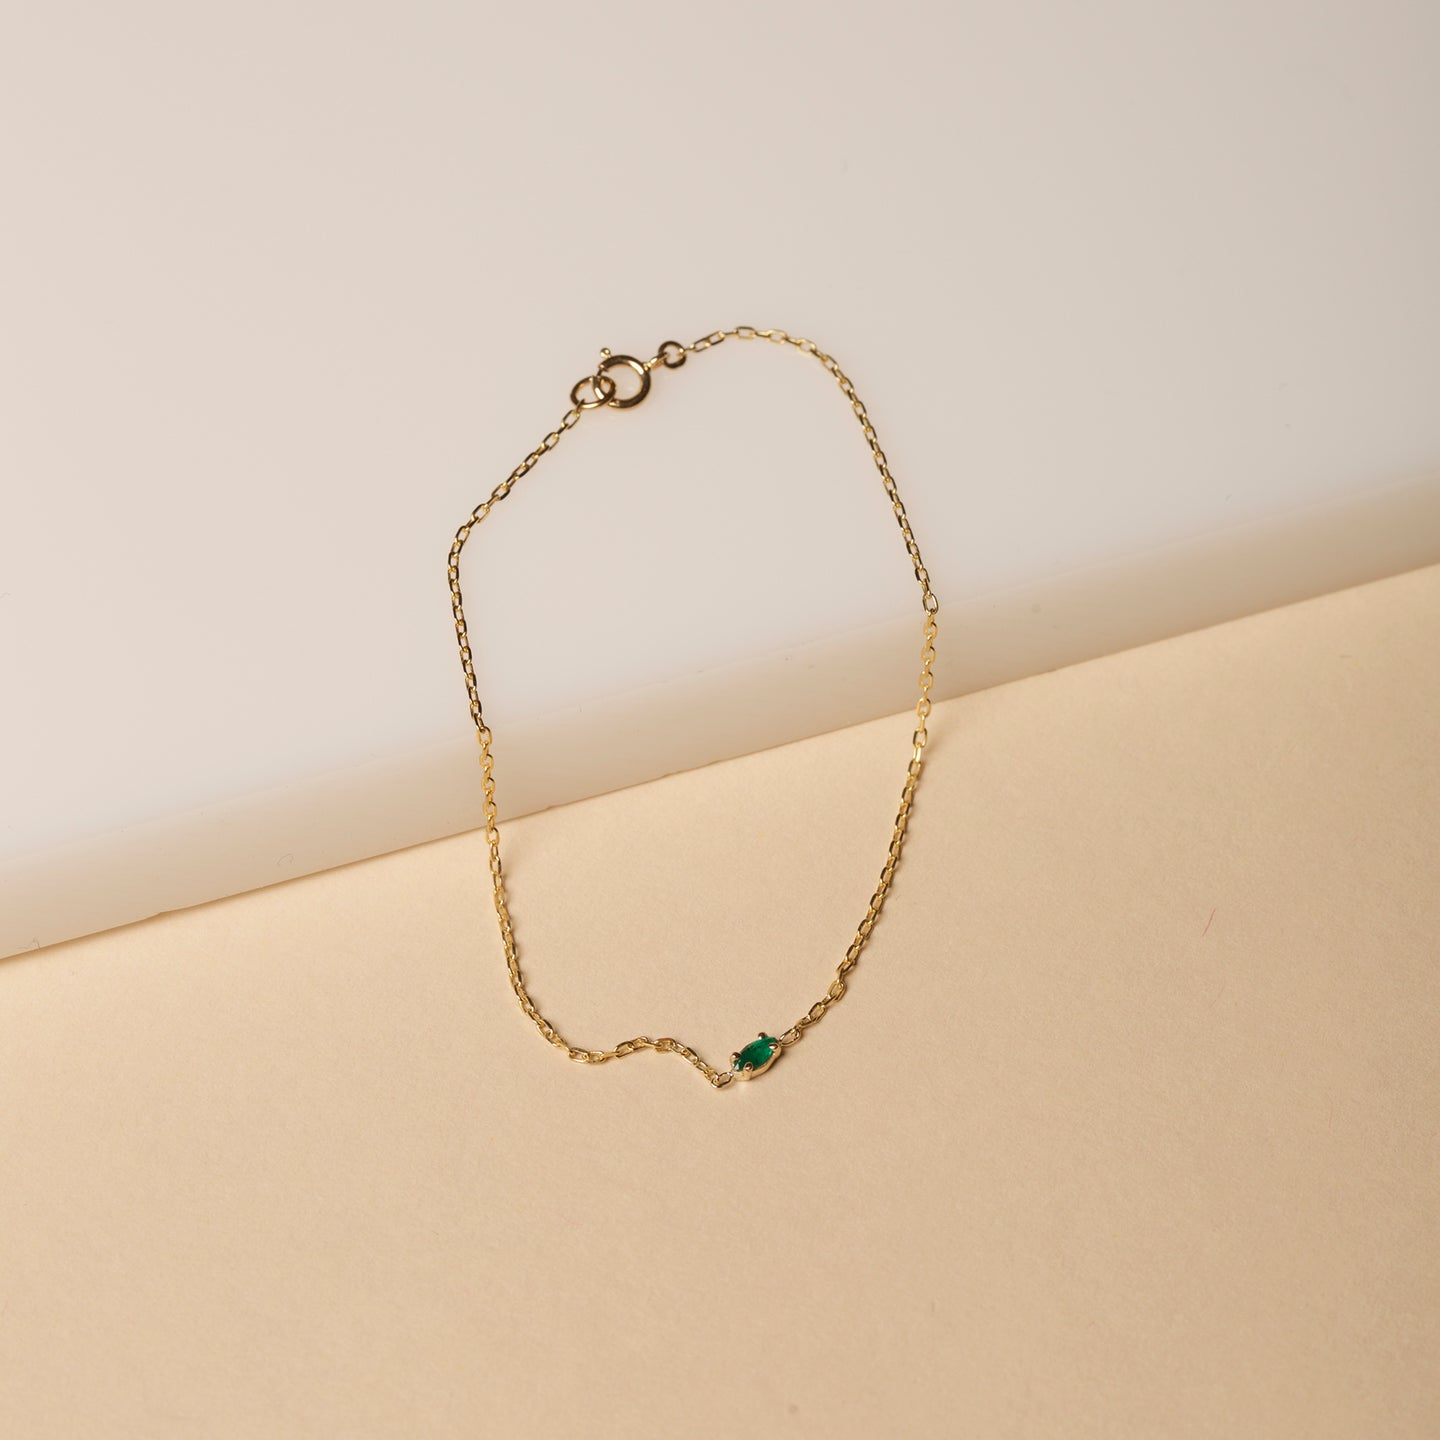 Emerald Bracelet - Things That Rock